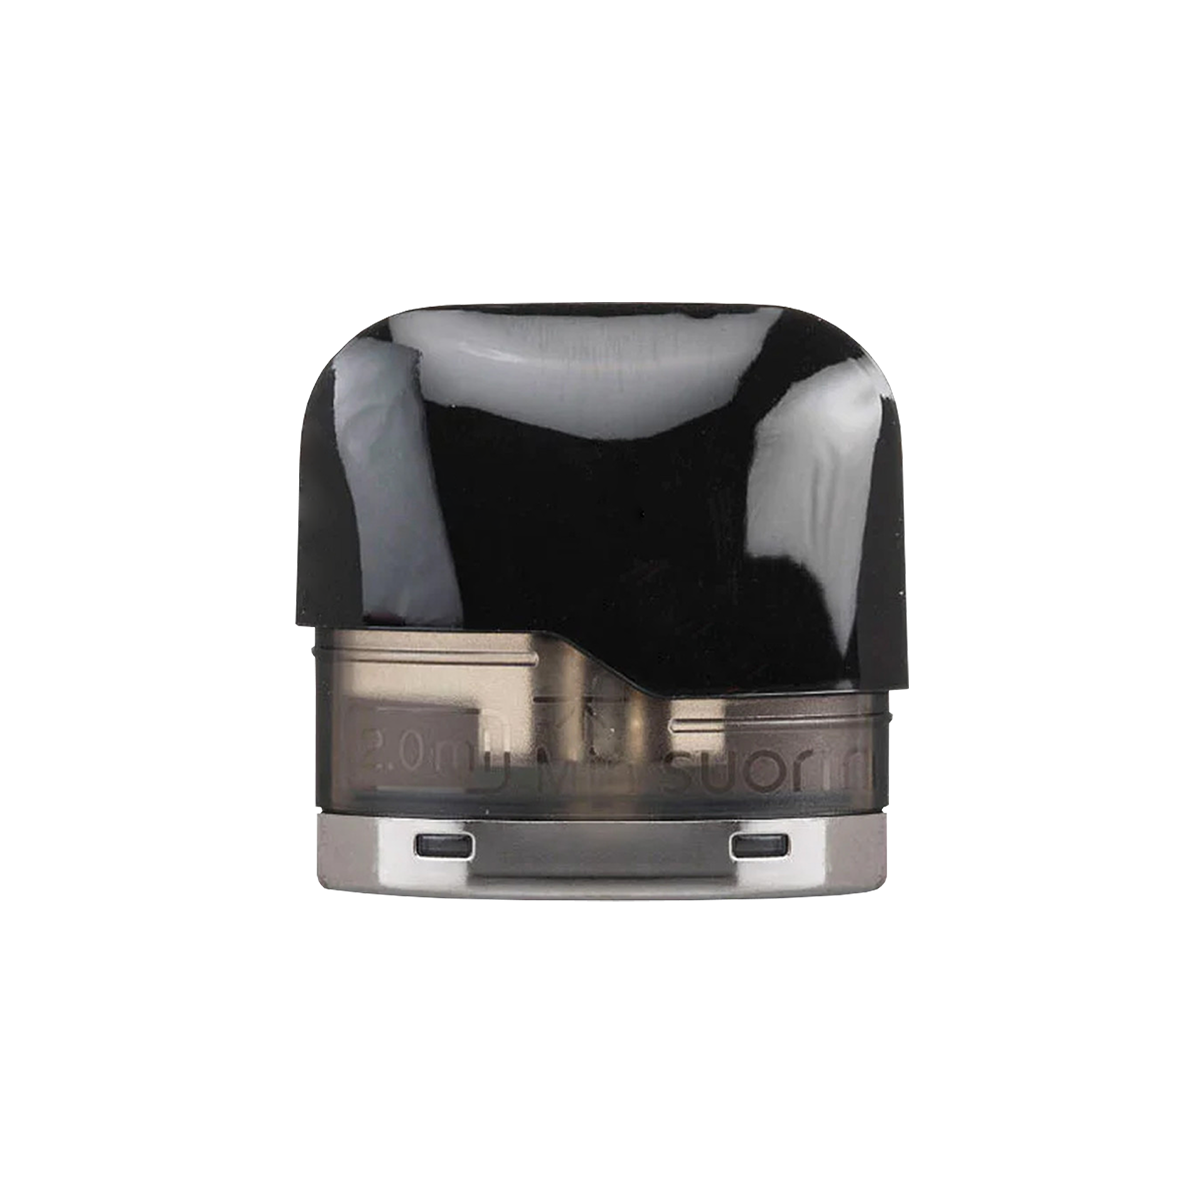 Suorin Air Mini Replacement Pods Cartridge Black  